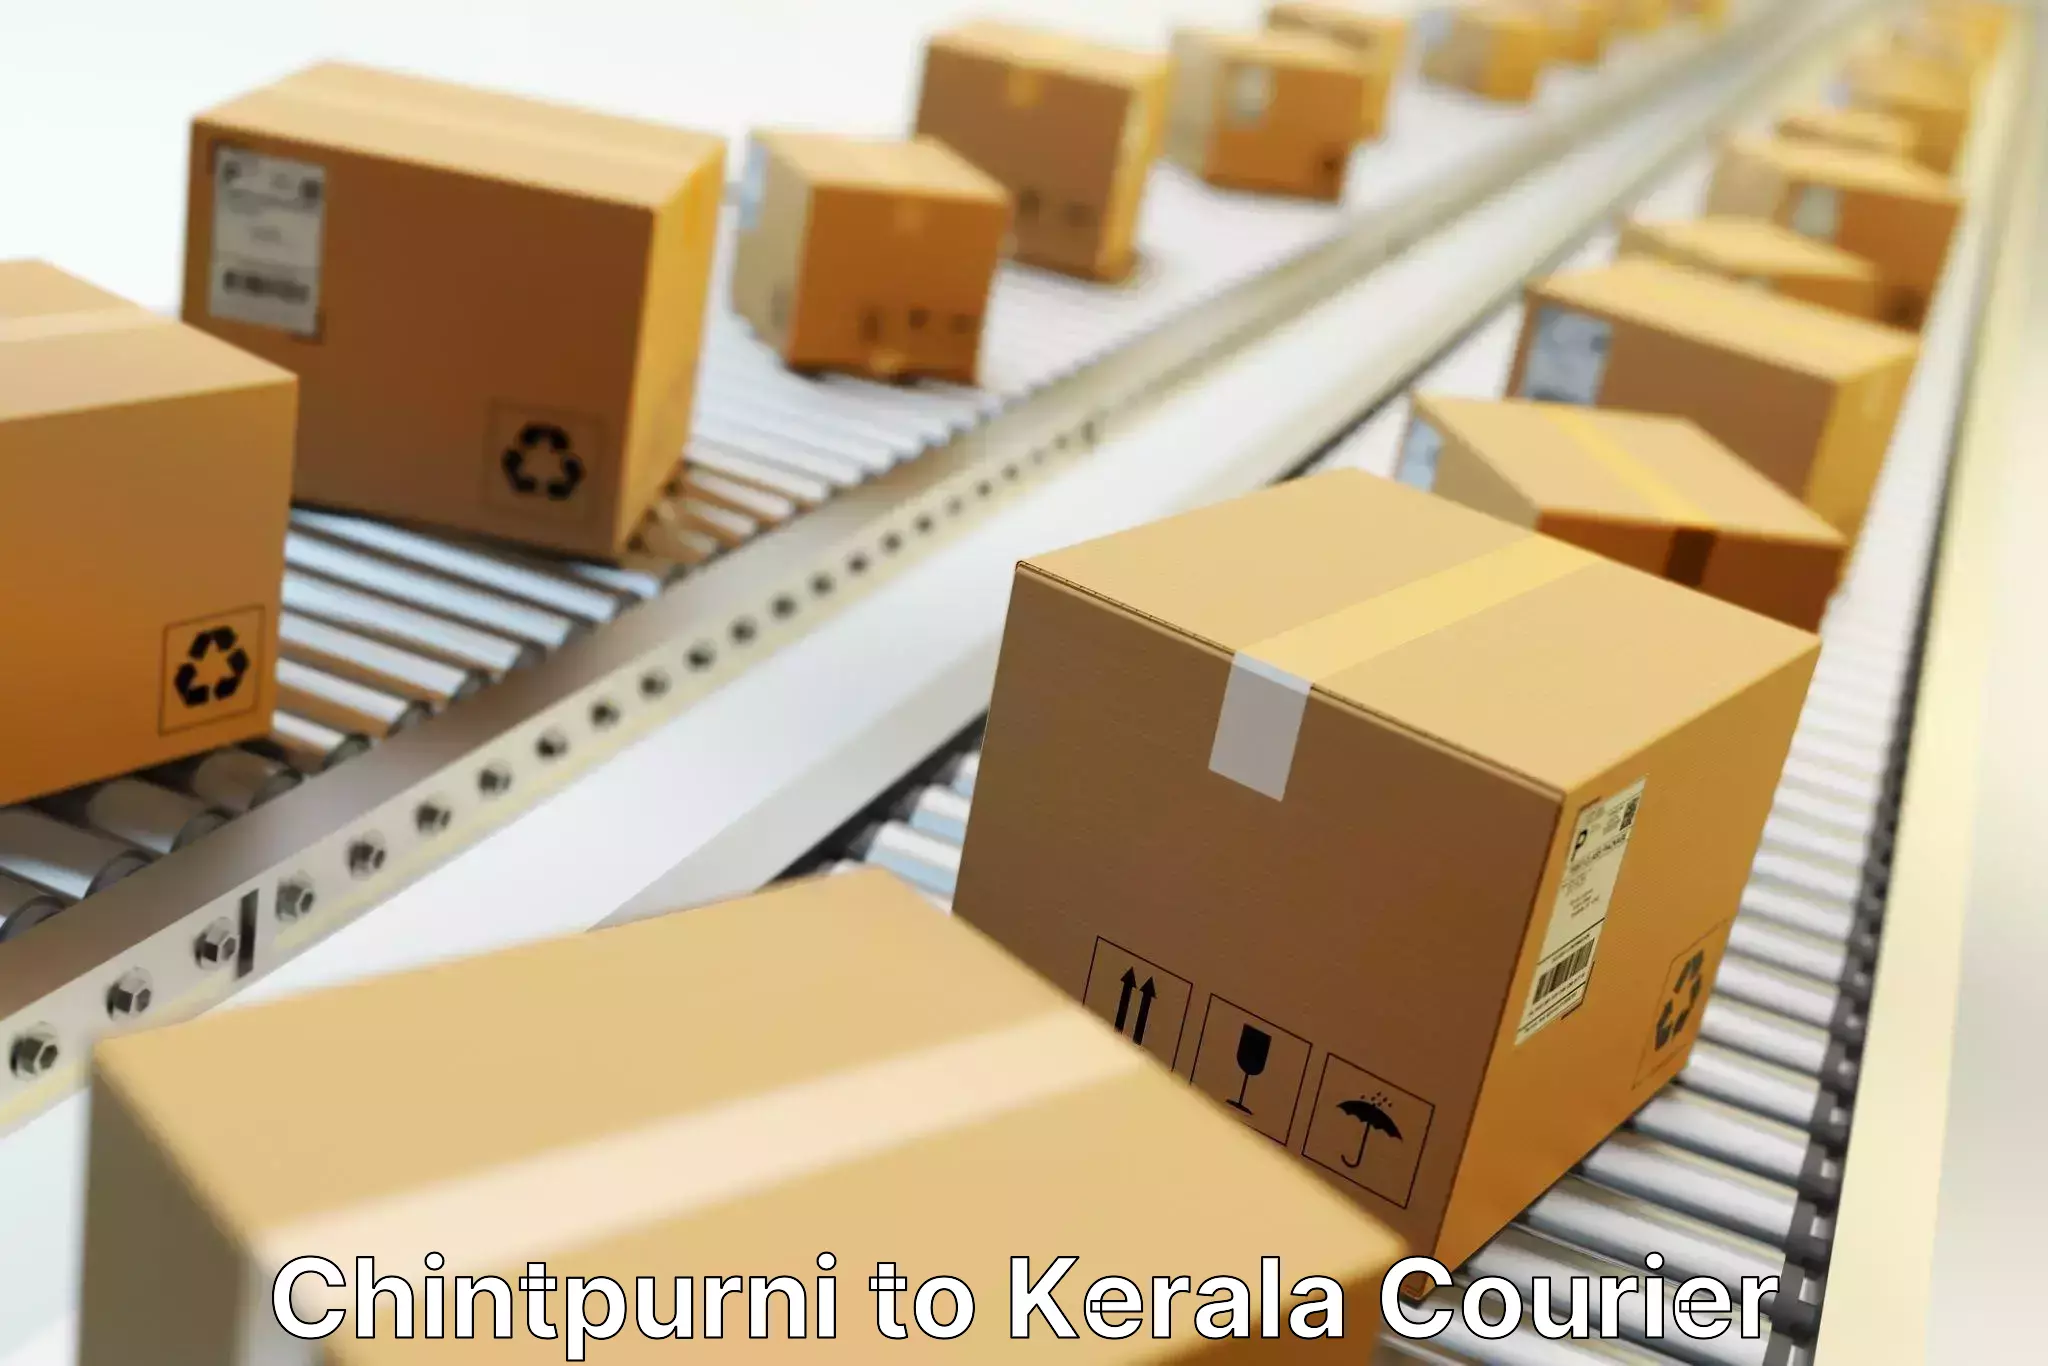 Advanced shipping network Chintpurni to Cochin Port Kochi